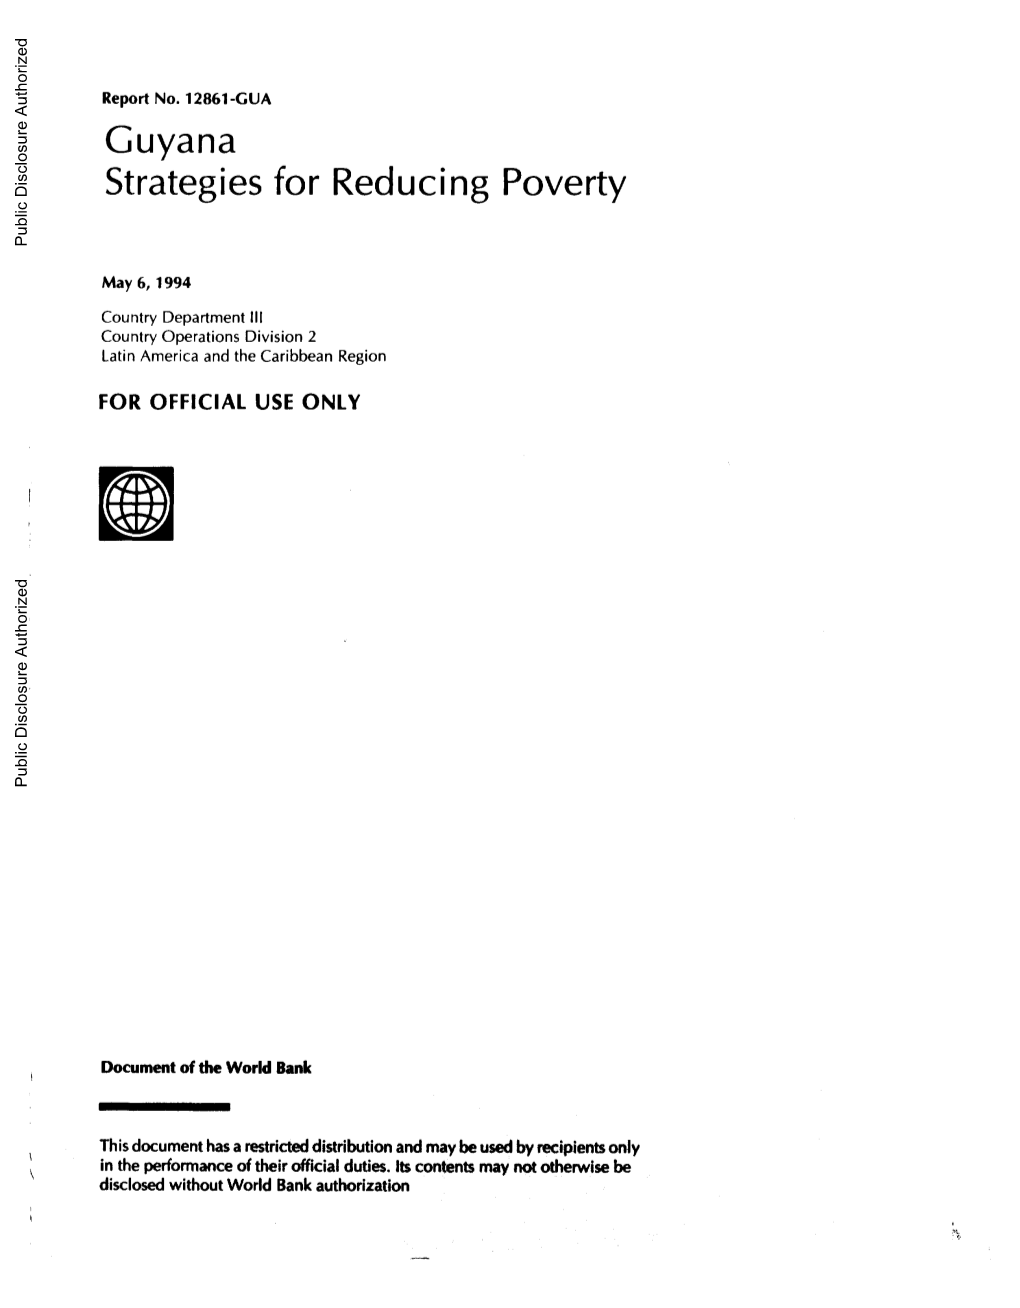 Guyana Strategiesfor Reducingpoverty Public Disclosure Authorized